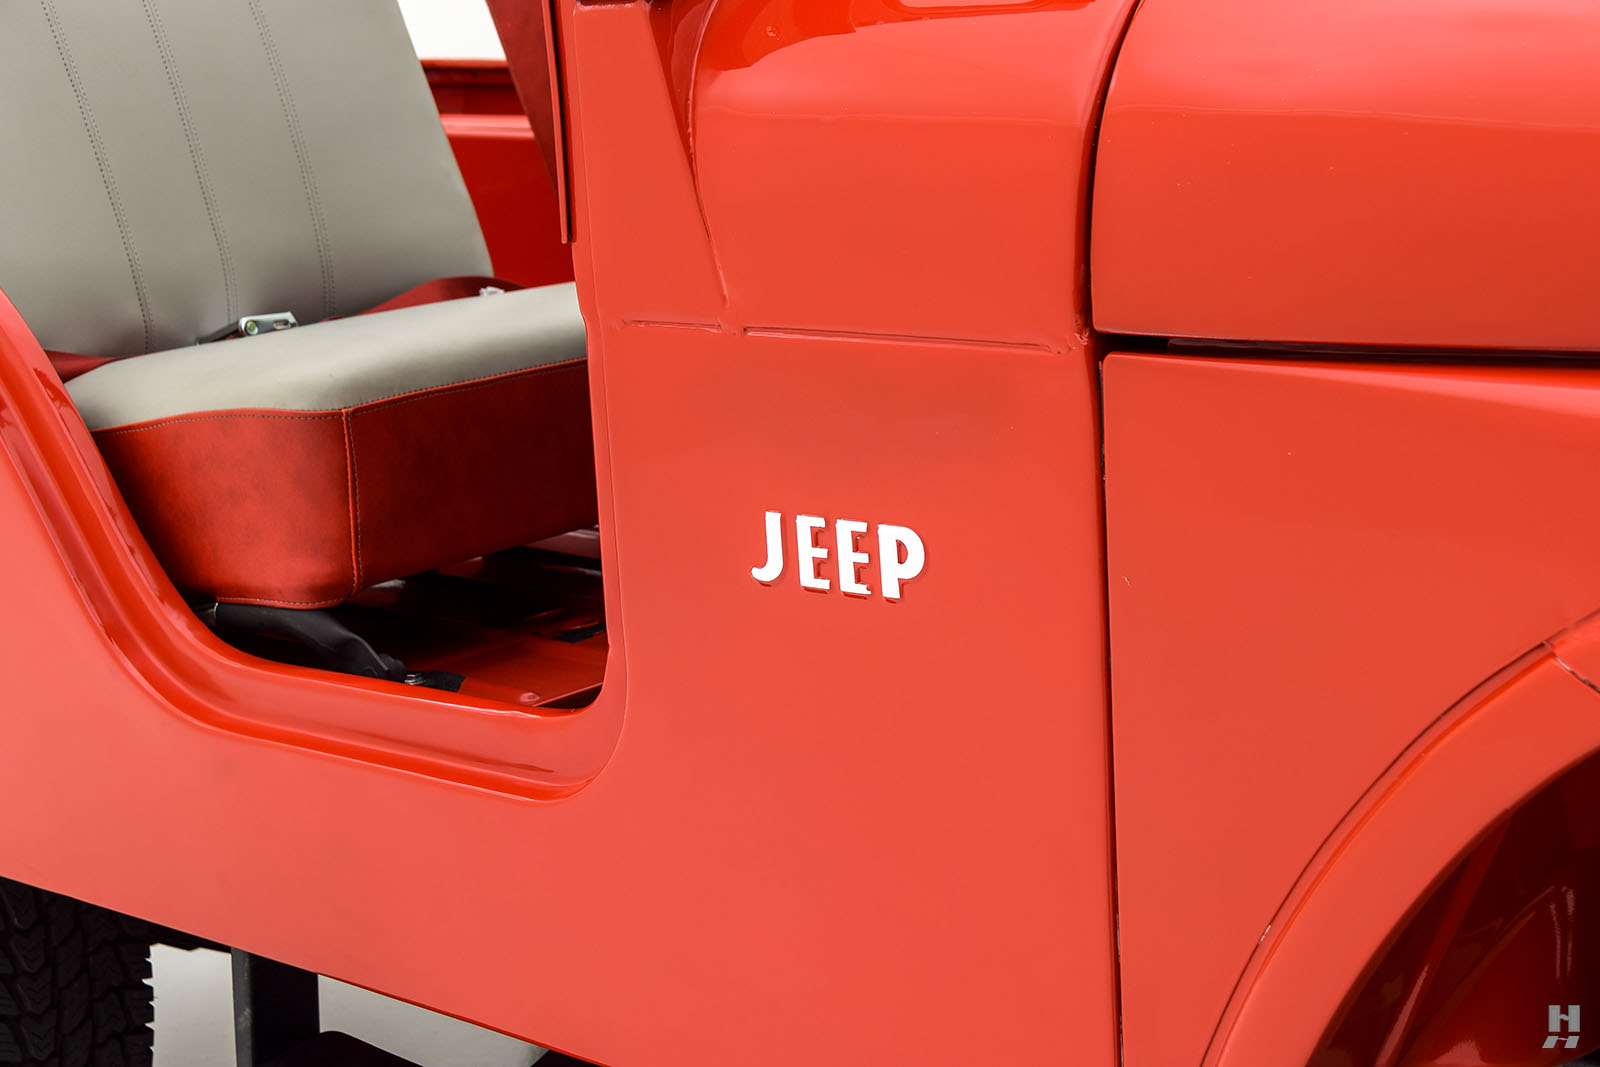 1964 jeep cj-5a tuxedo park